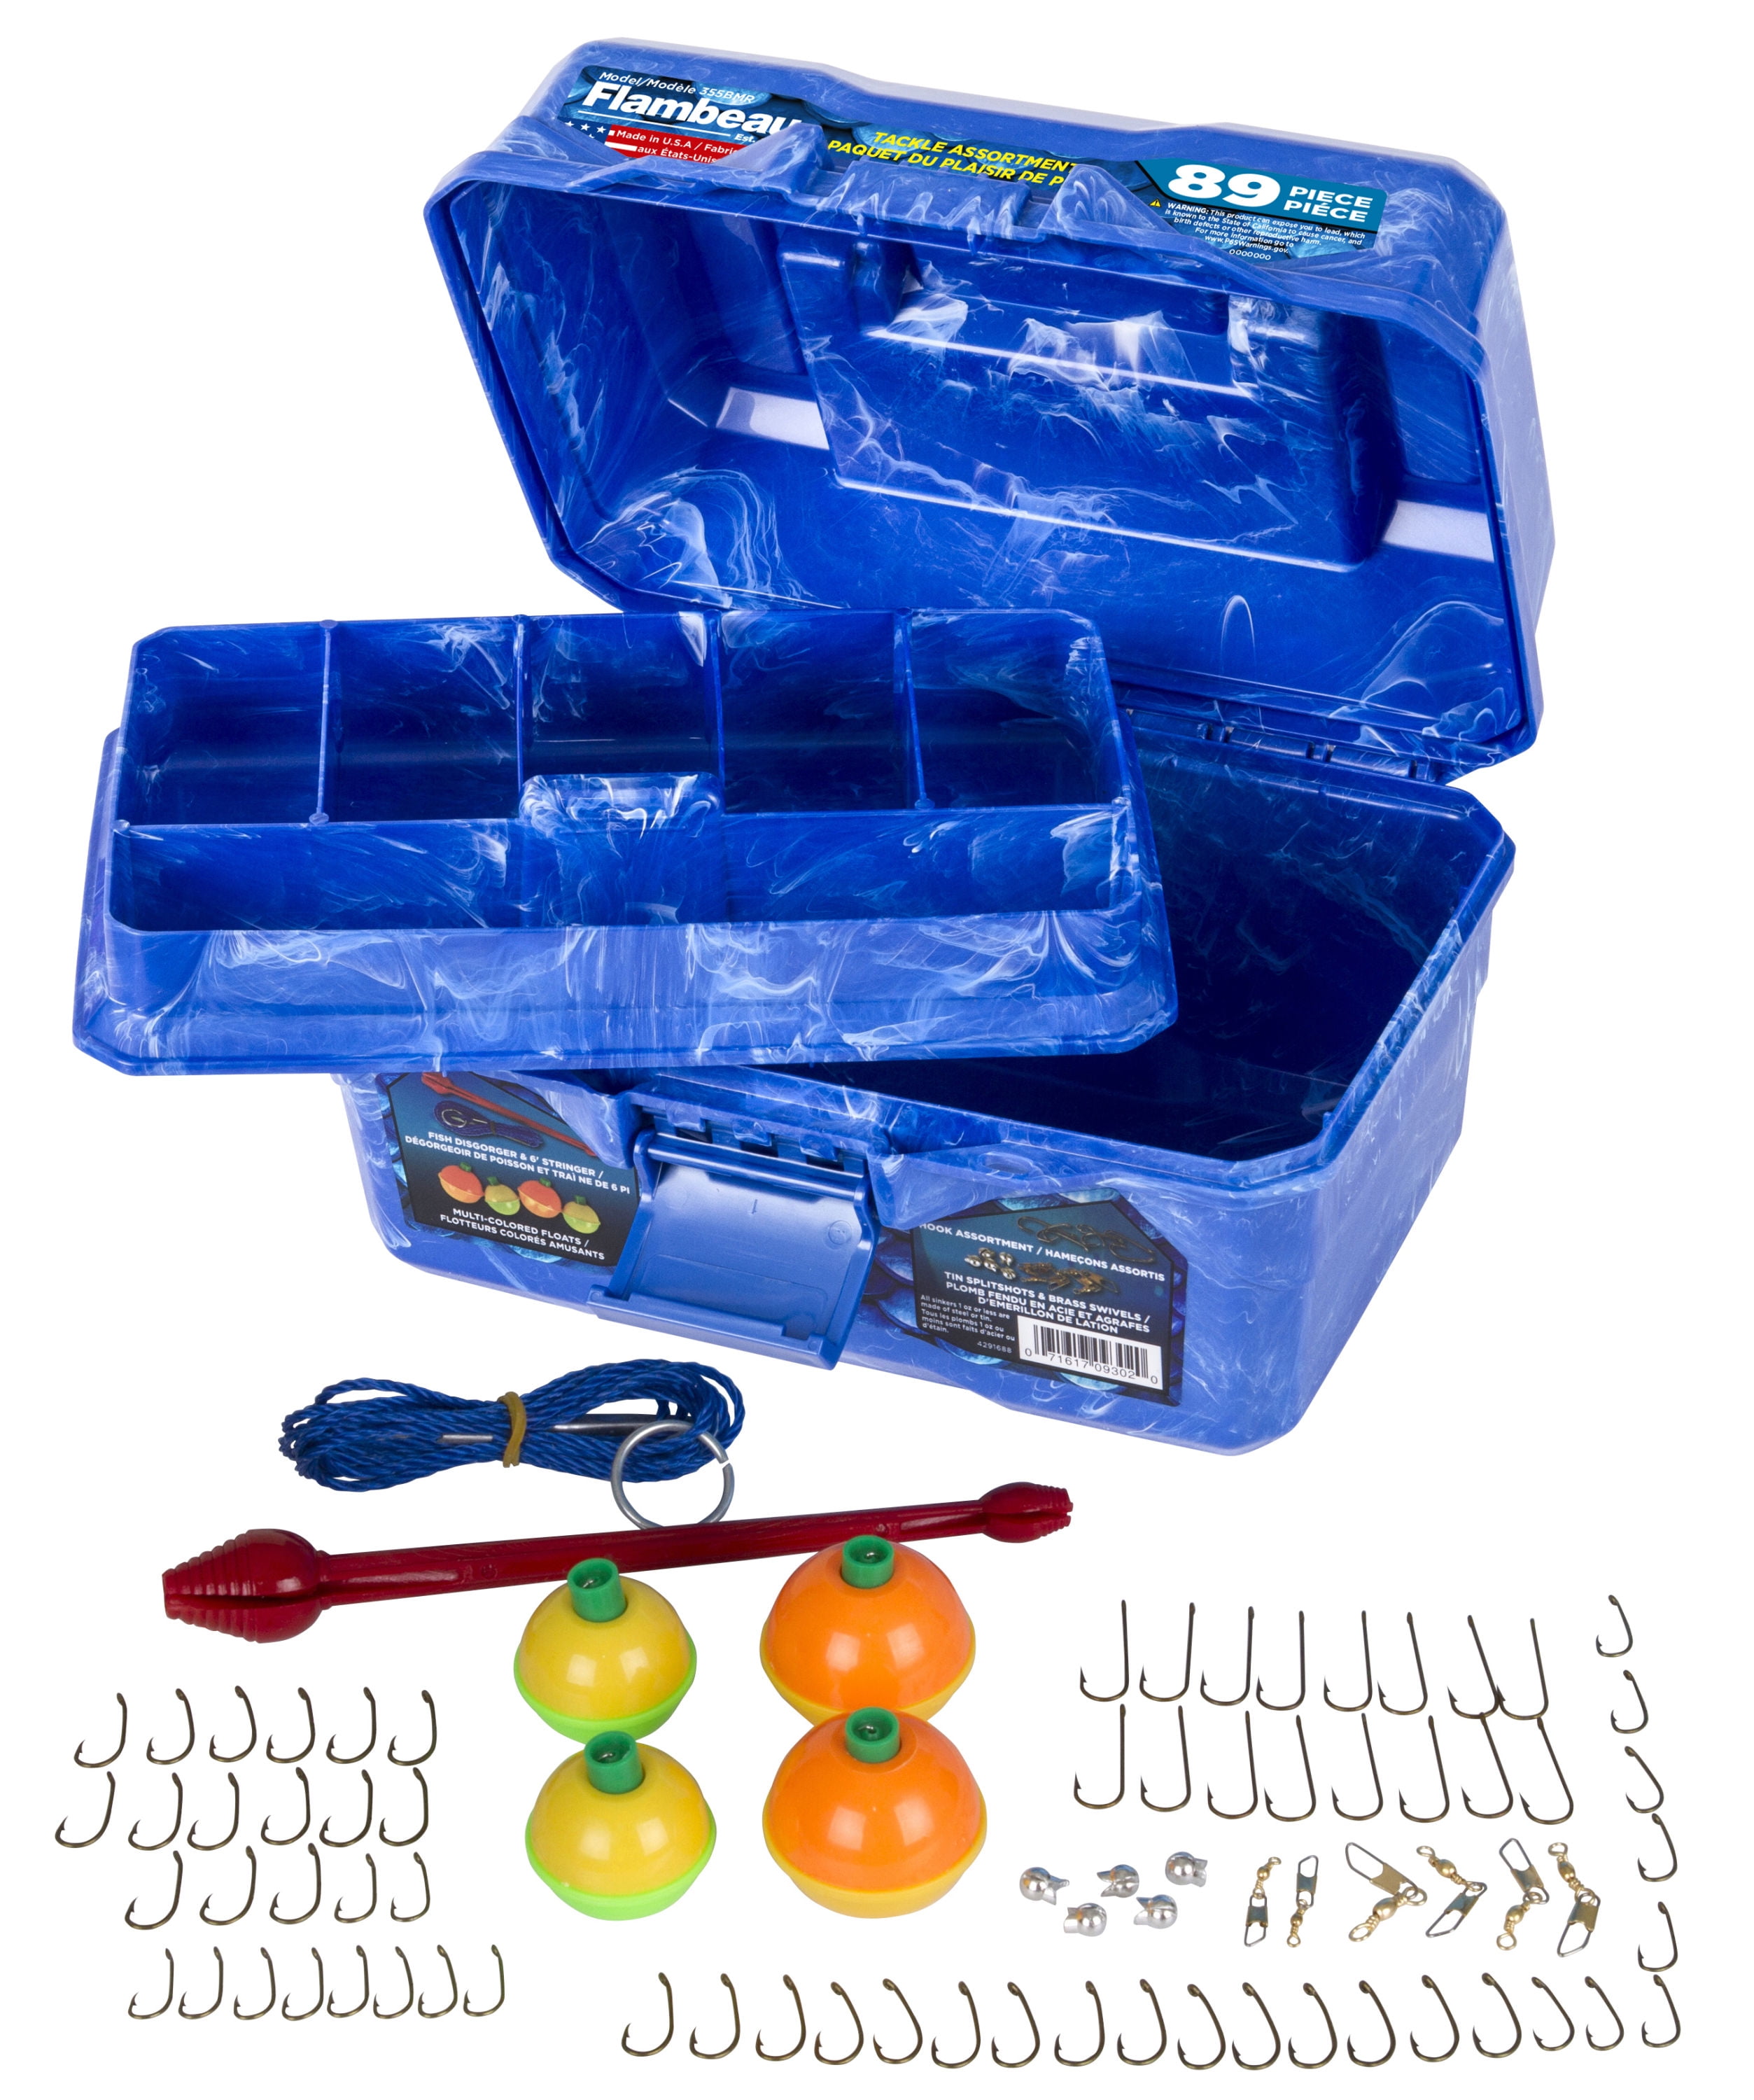 Nicklow's Wholesale Tackle > Kits > Wholesale K&E Tackle Walleye Tackle Kit